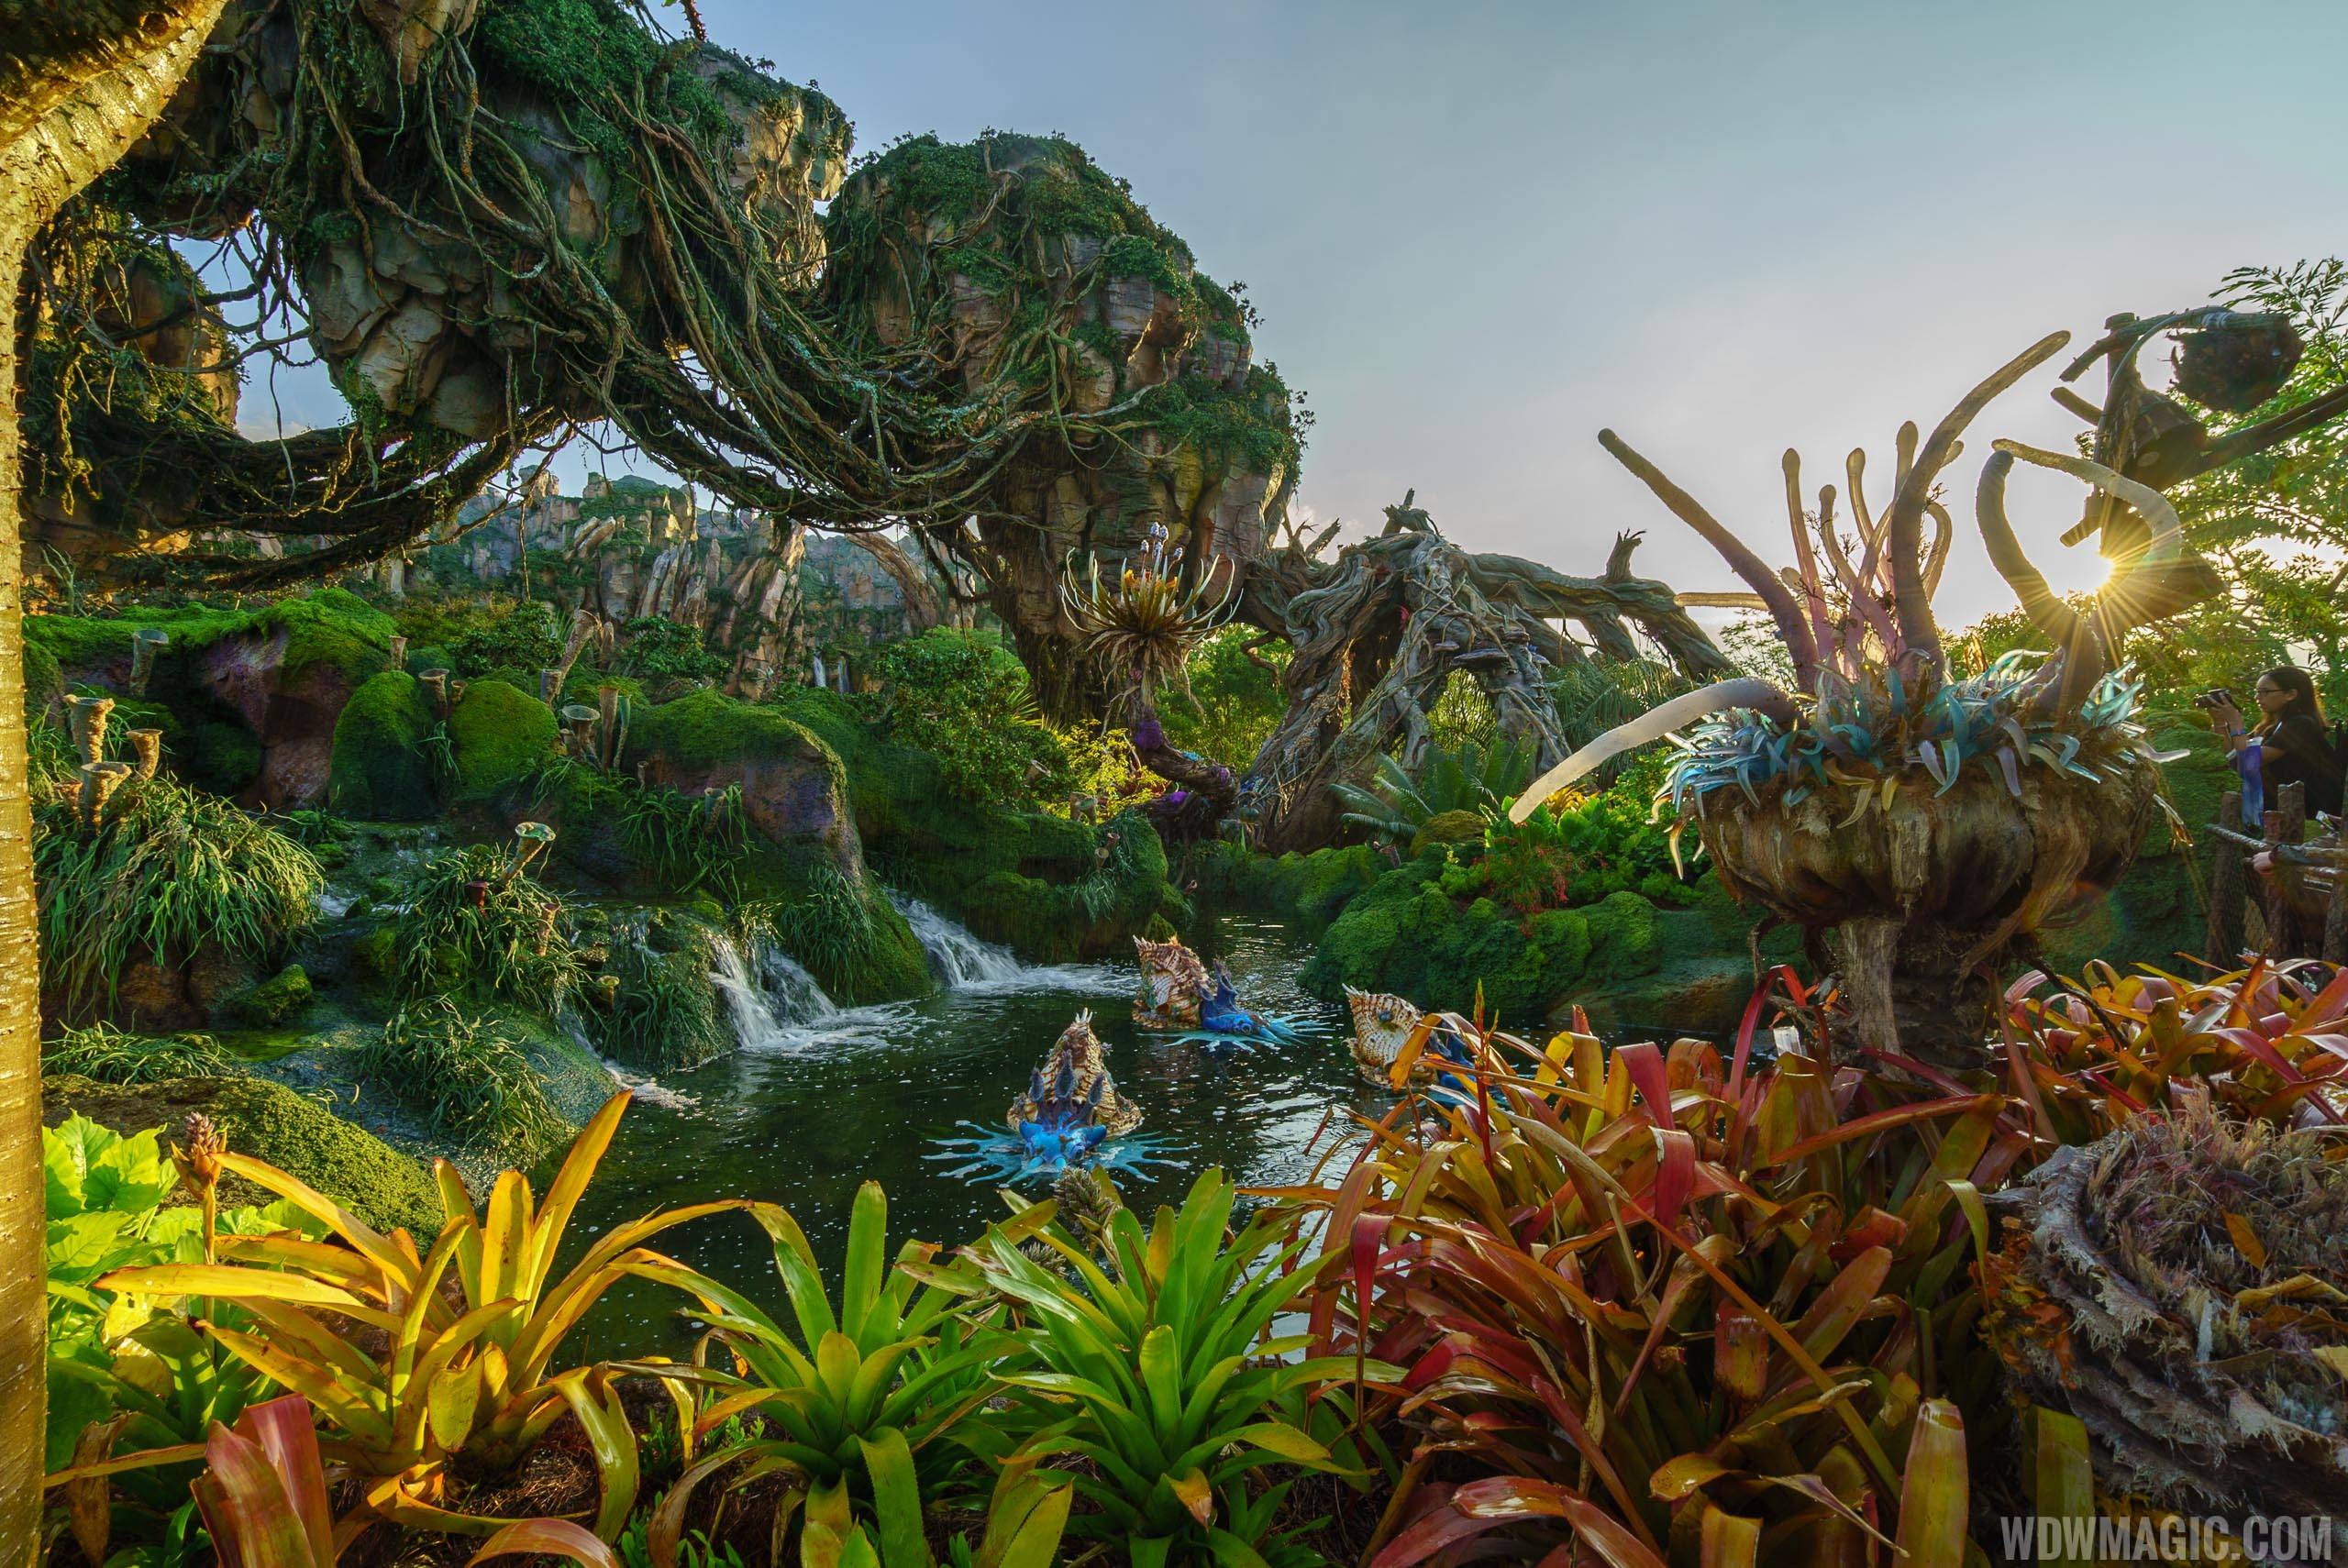 Cast of 'Avatar: The Way of Water' returns to Pandora at Disney's Animal Kingdom